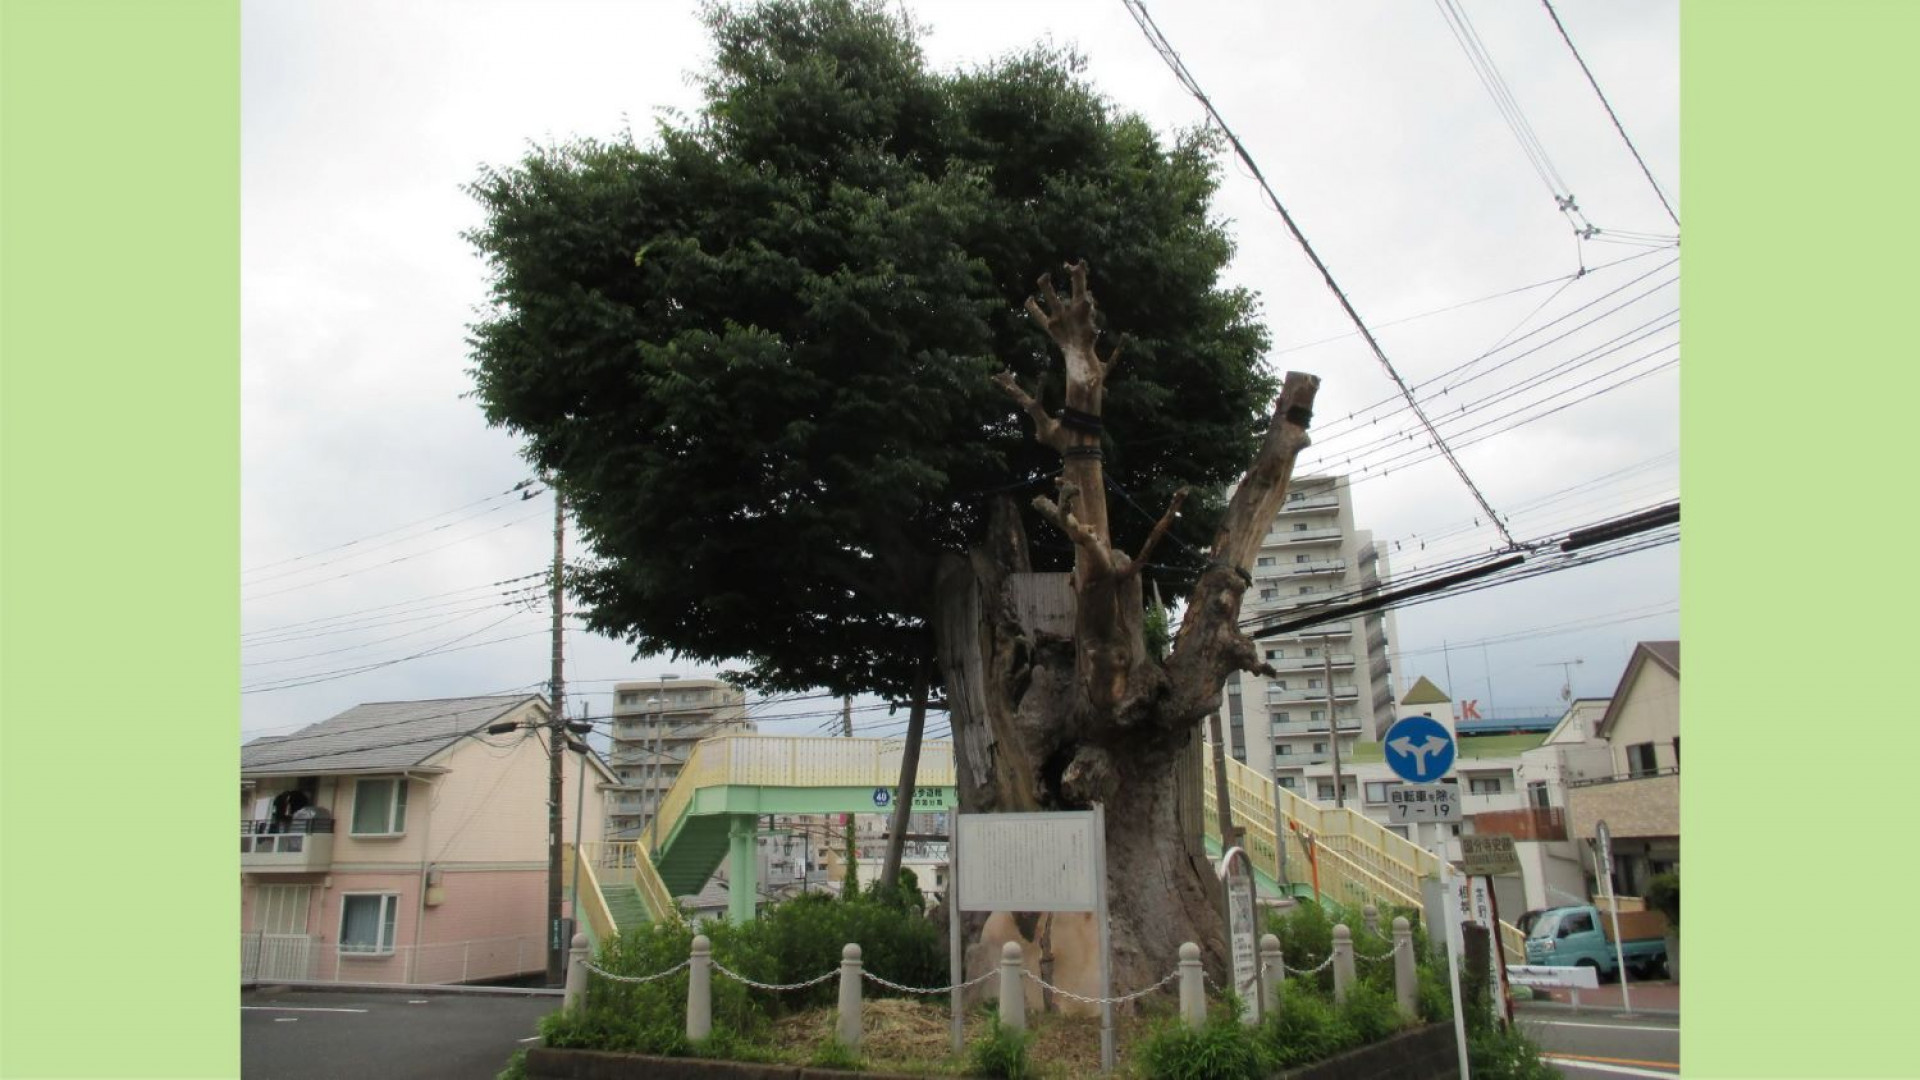 Big Zelkova Tree in Ebina